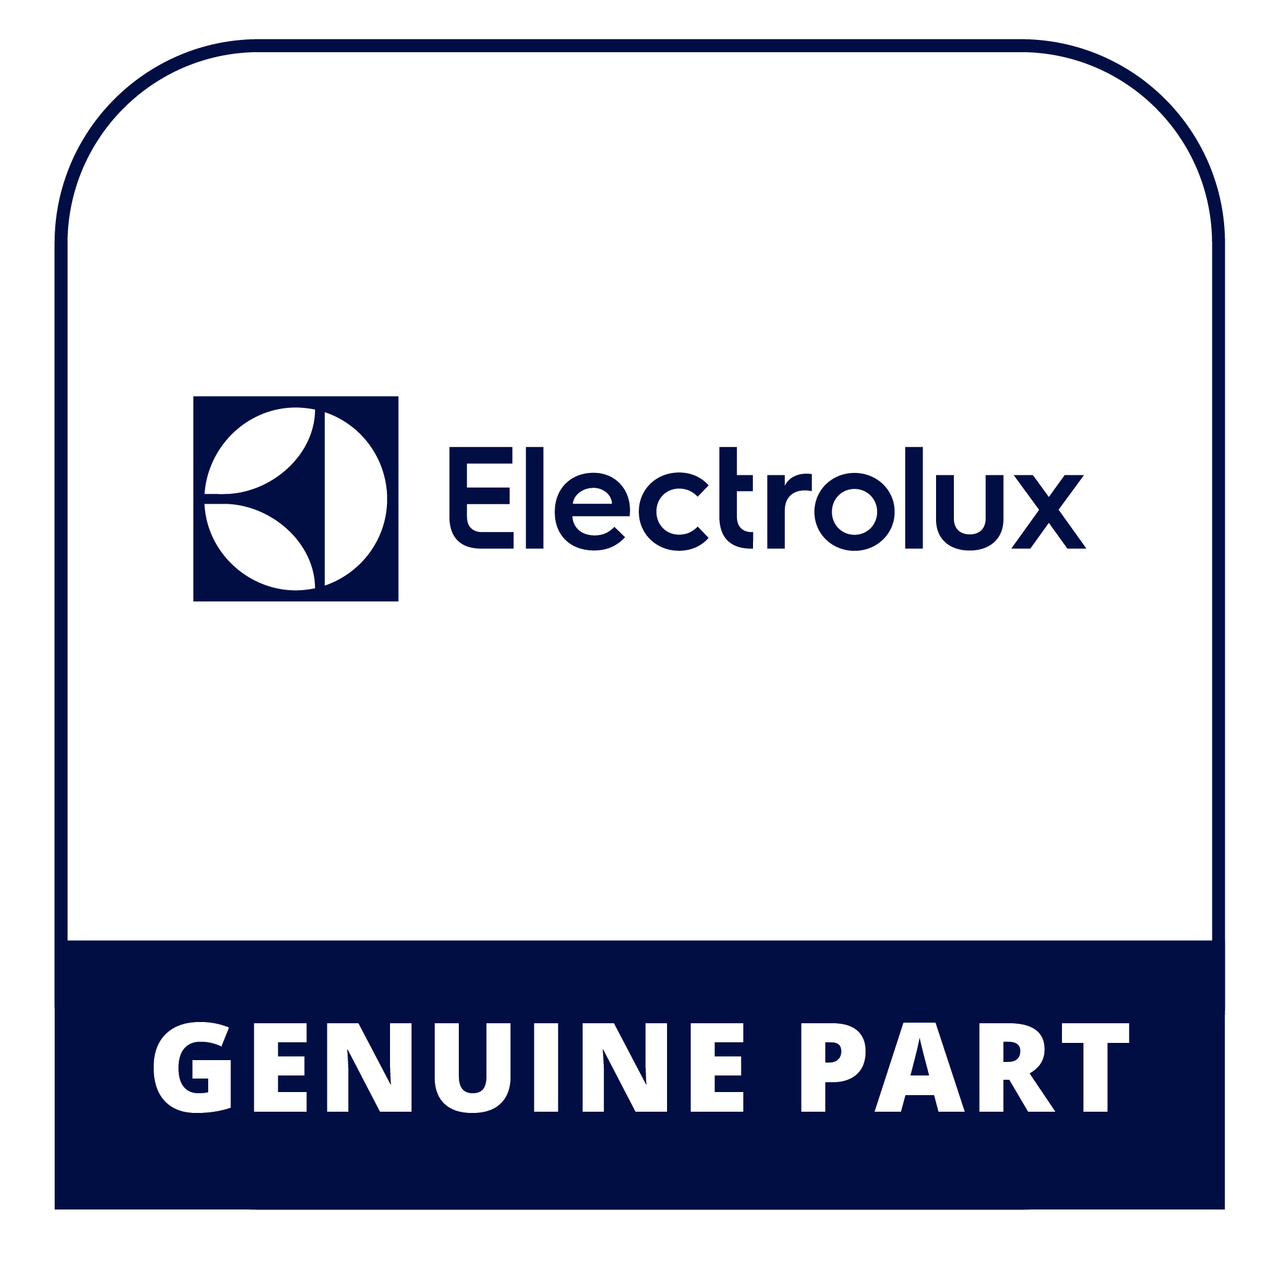 Frigidaire - Electrolux 318905813 Panel - Genuine Electrolux Part